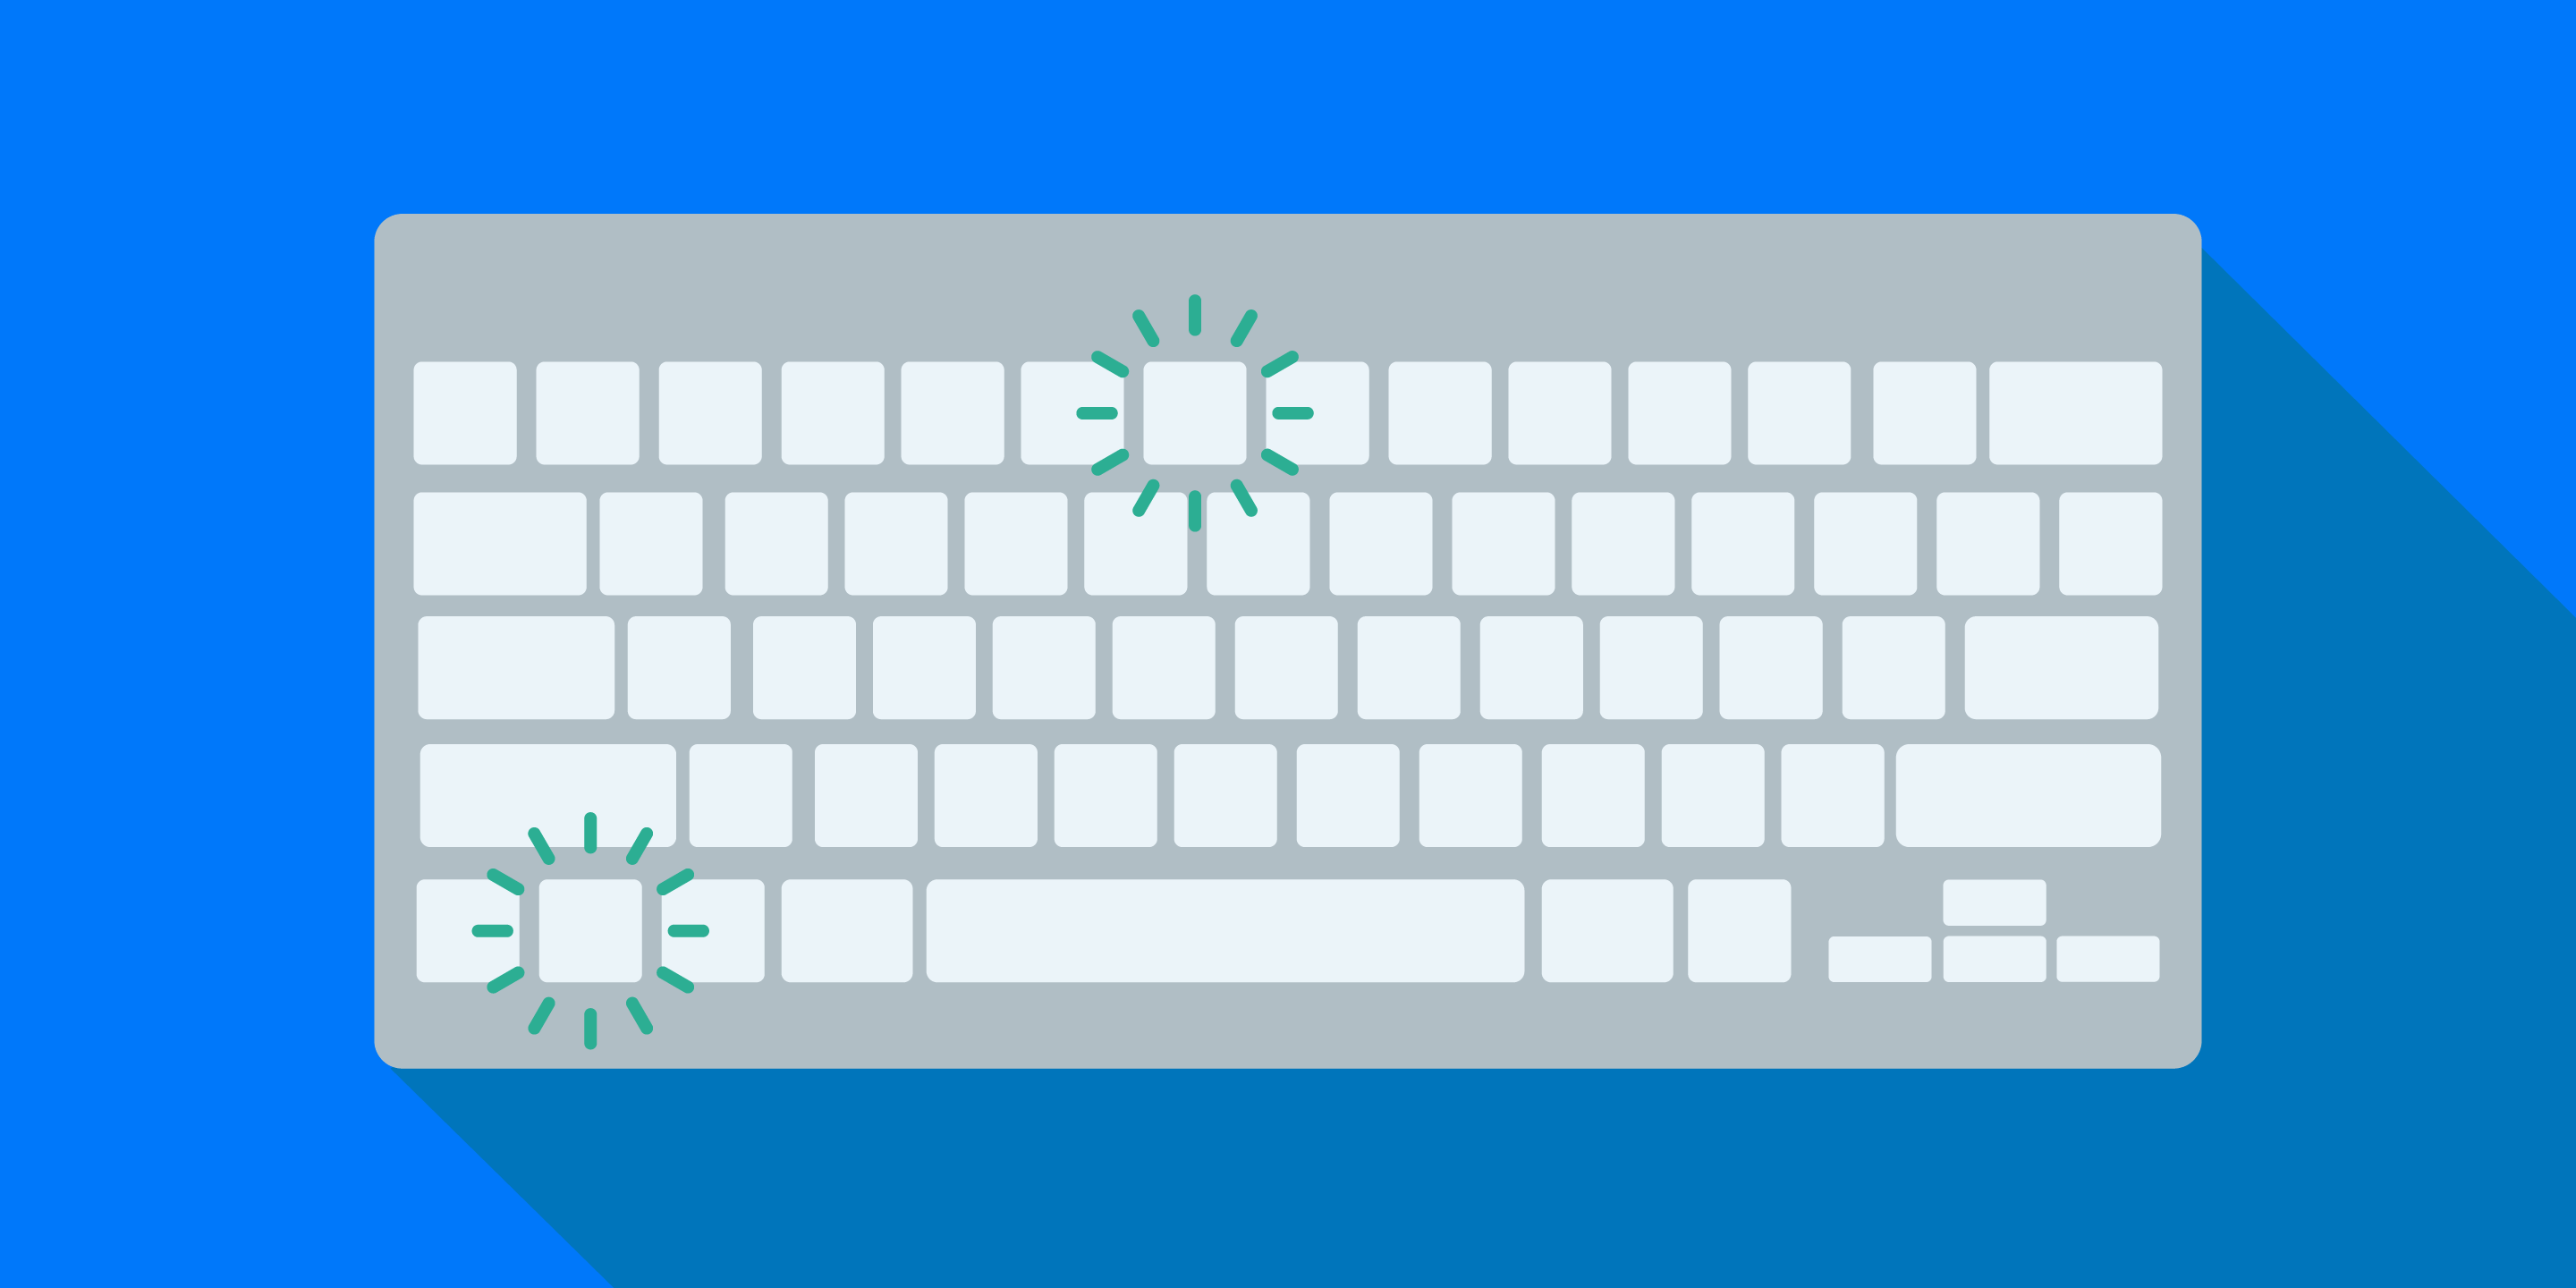 keyboard mac shortcuts symbols